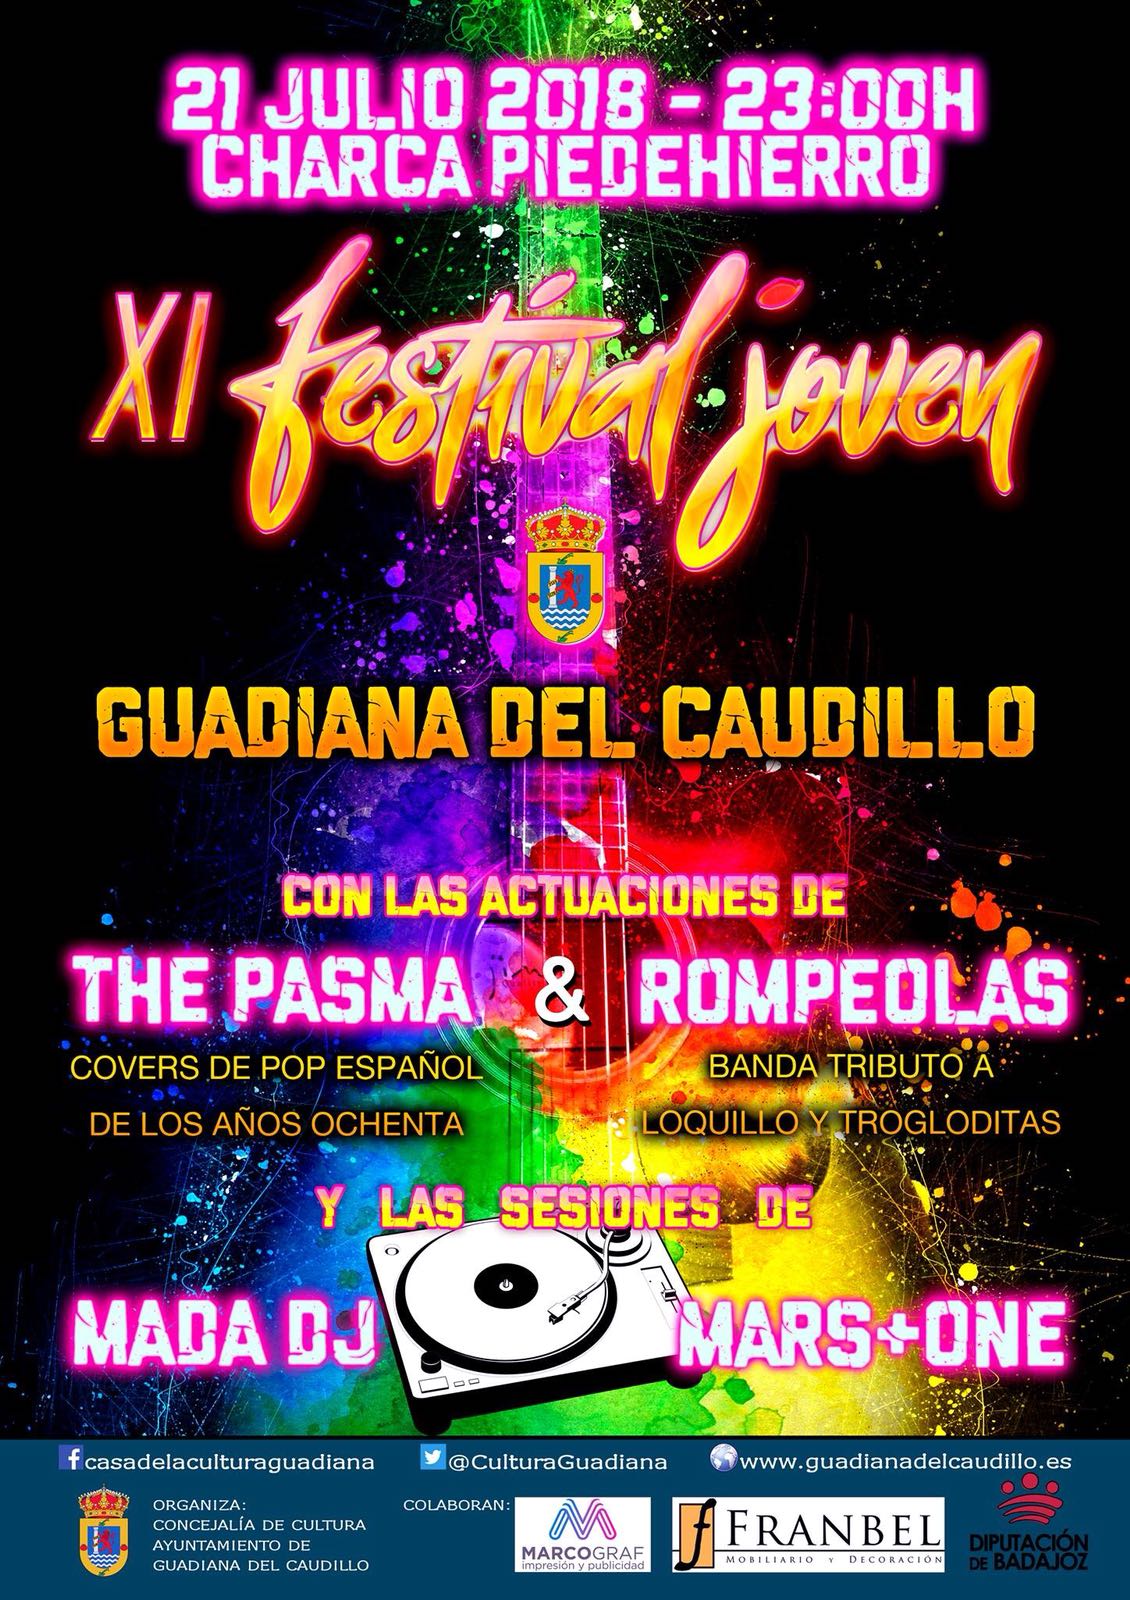 La pasma cover band y Rompeolas (Tributo a Loquillo) en Guadiana del caudillo